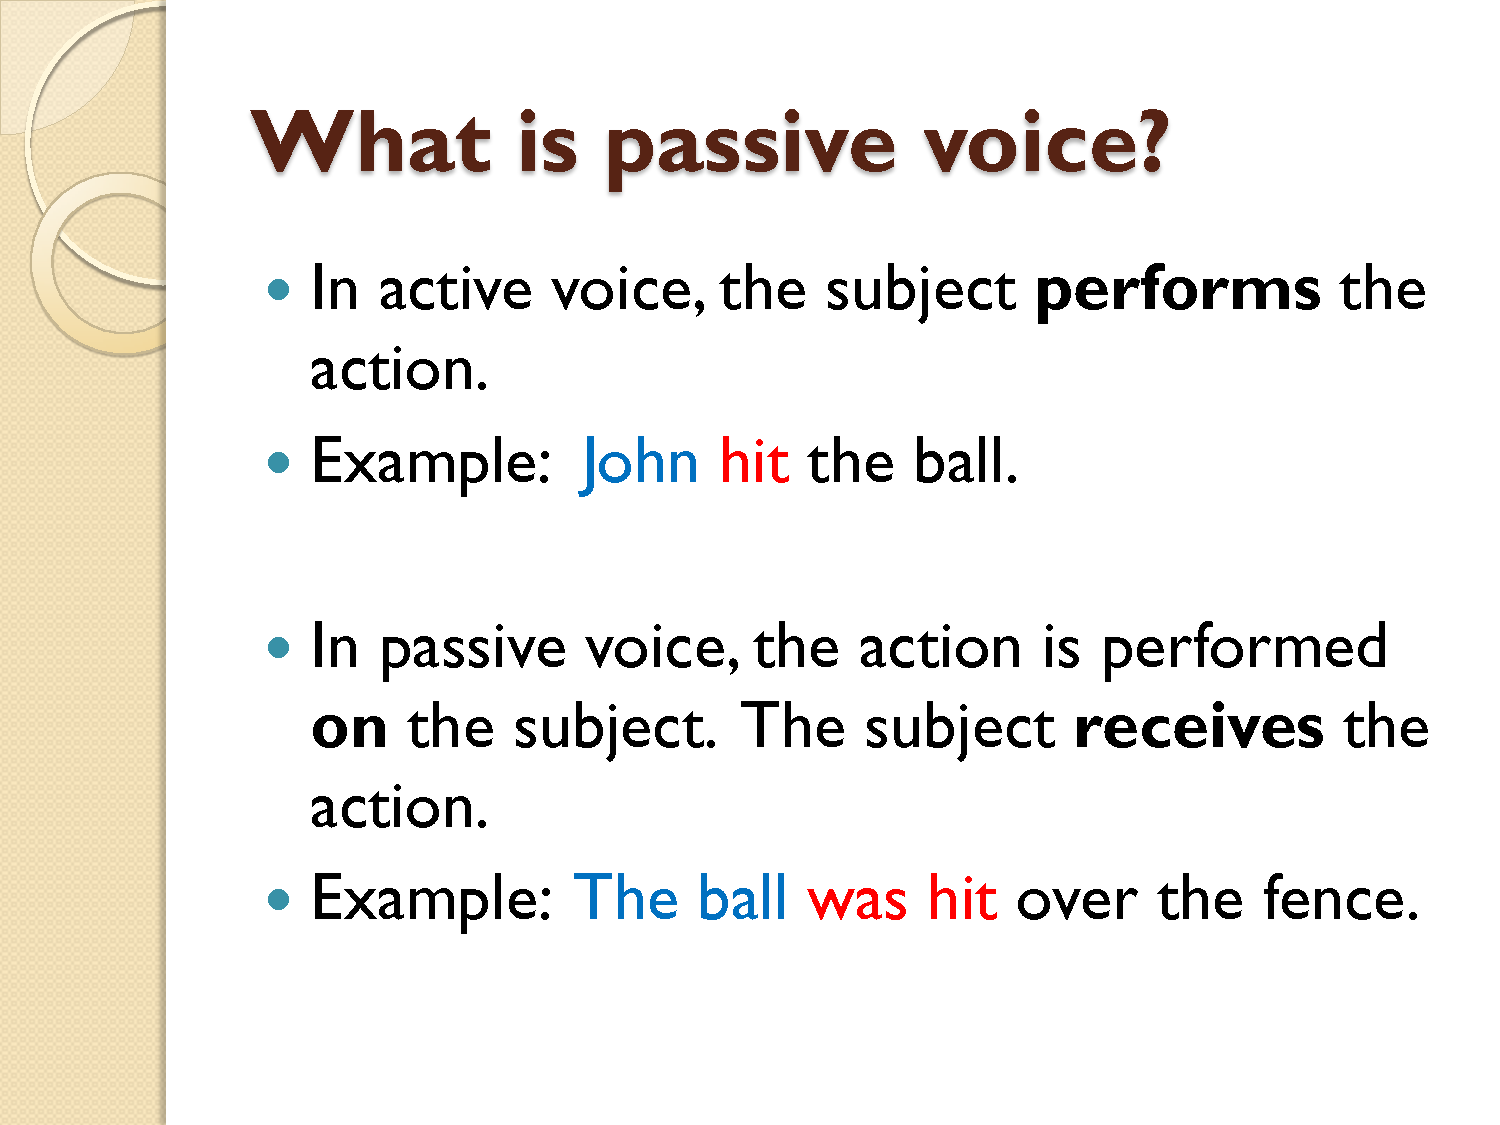 Passive voice to ask. Passive Voice. Active and Passive Voice. What is Passive Voice. Active Voice and Passive Voice.